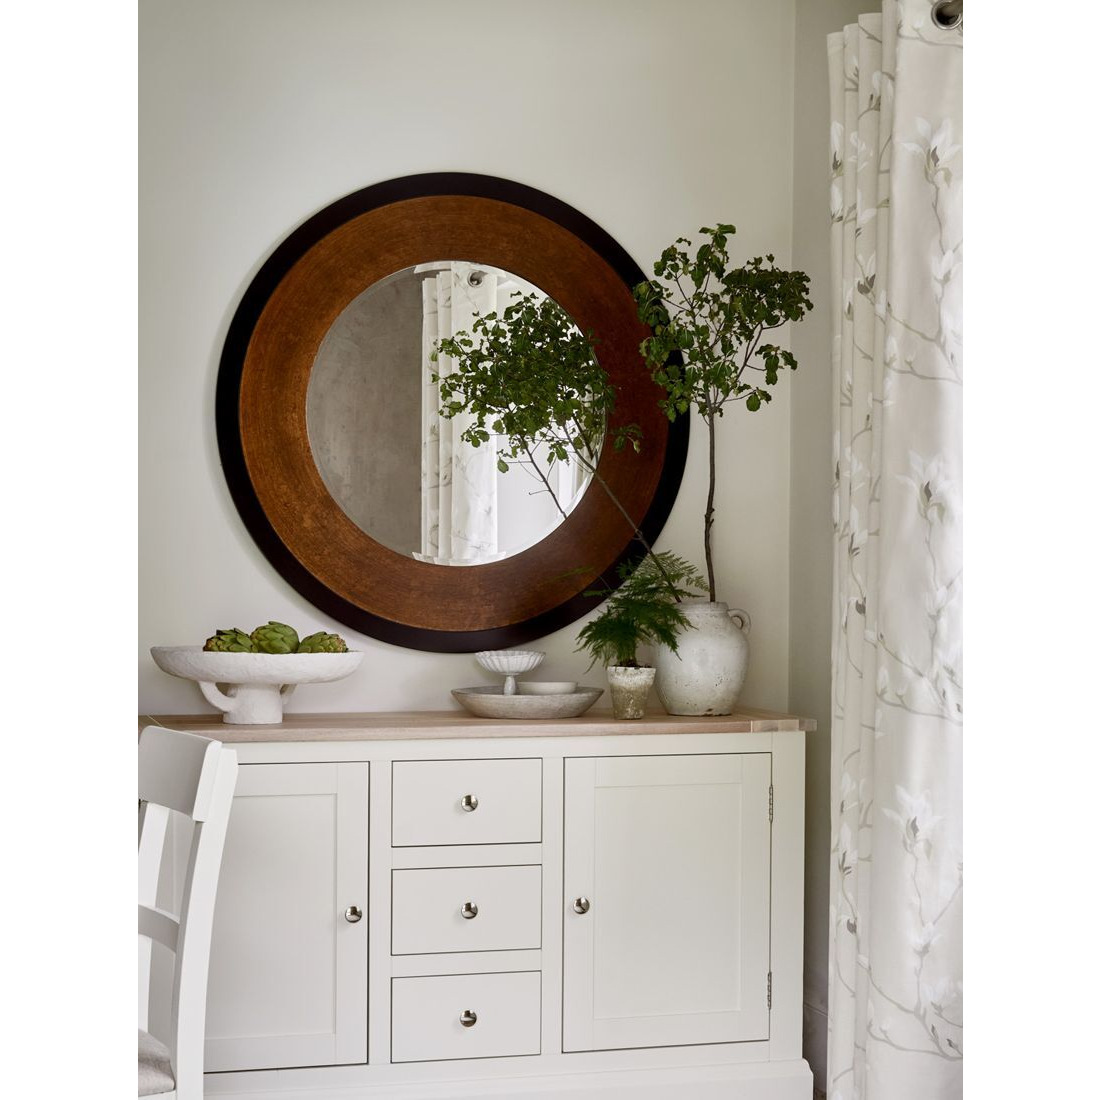 Laura Ashley Cara Round Wall Mirror, 110cm, Bronze - image 1